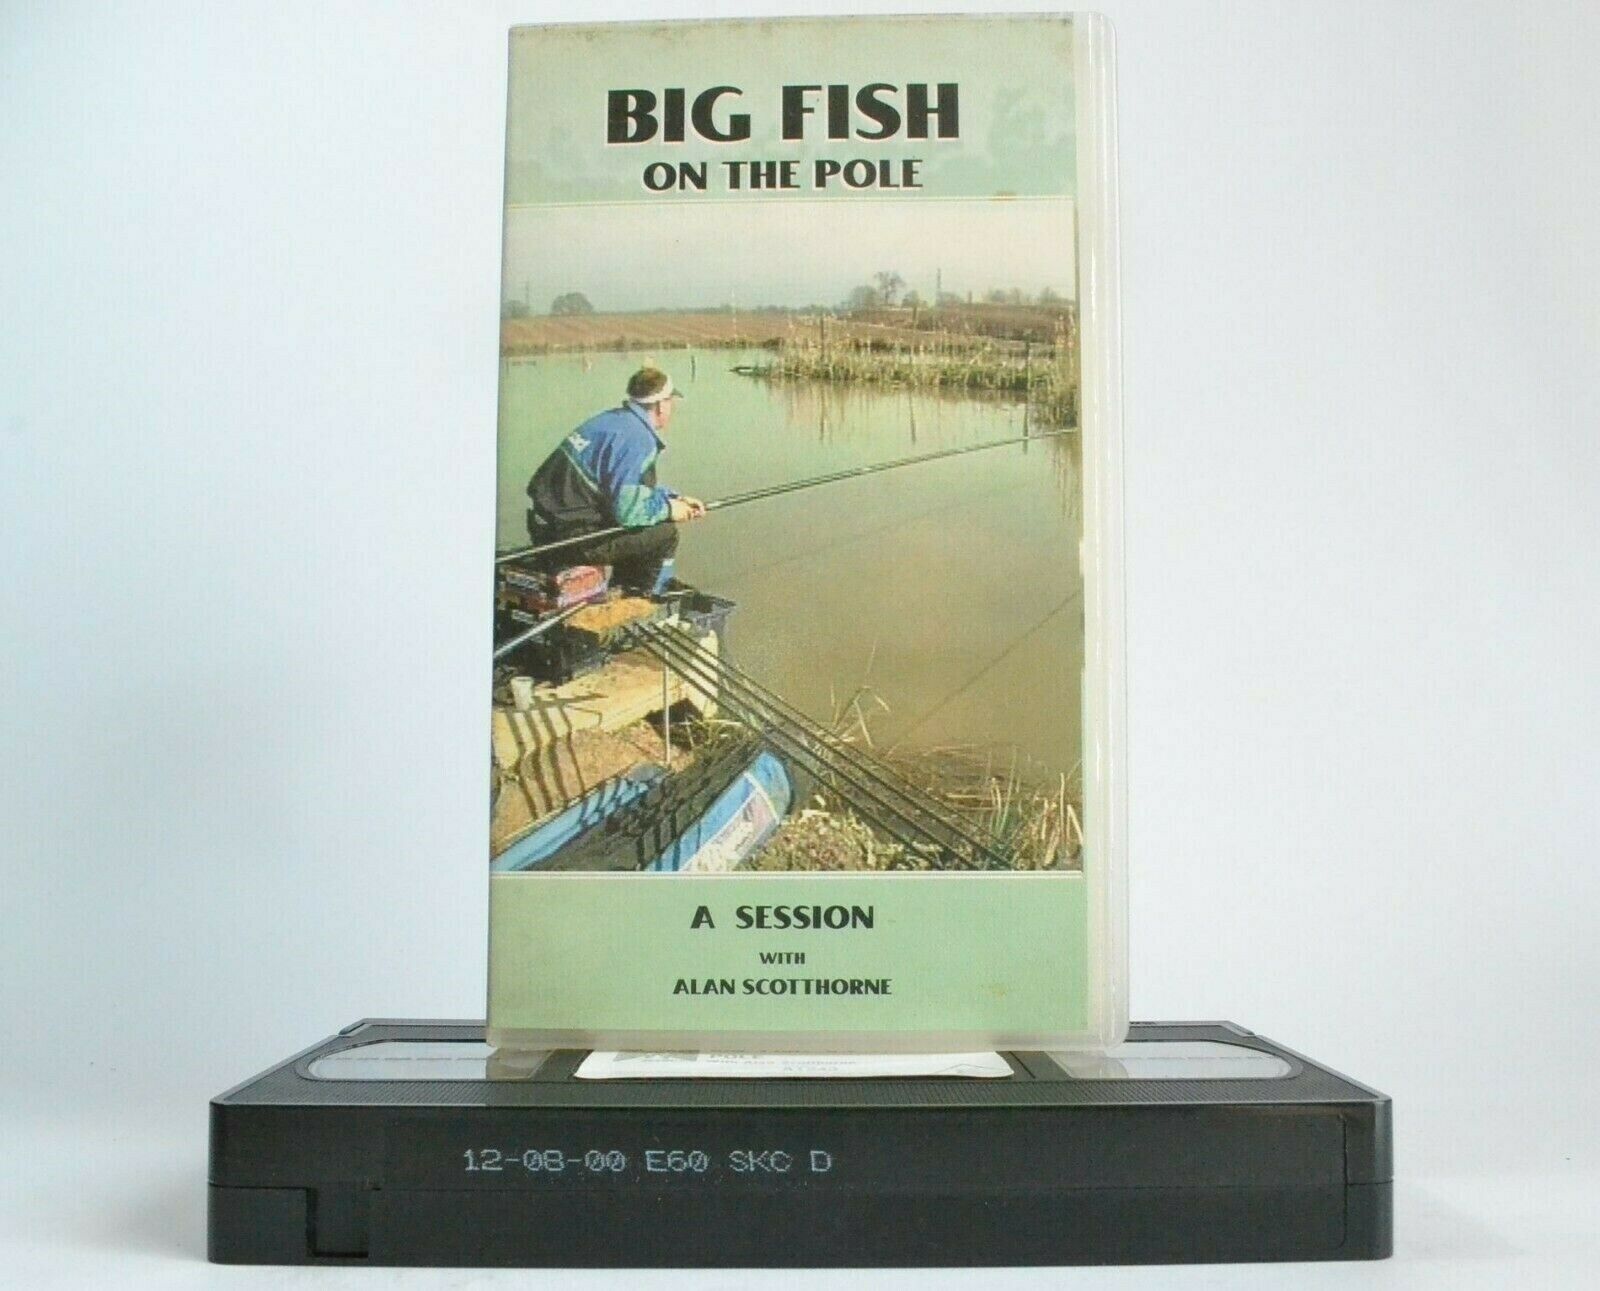 Big Fish On The Pole [Alan Scotthorne] - Fishing - Carp - Woodlands View - VHS-